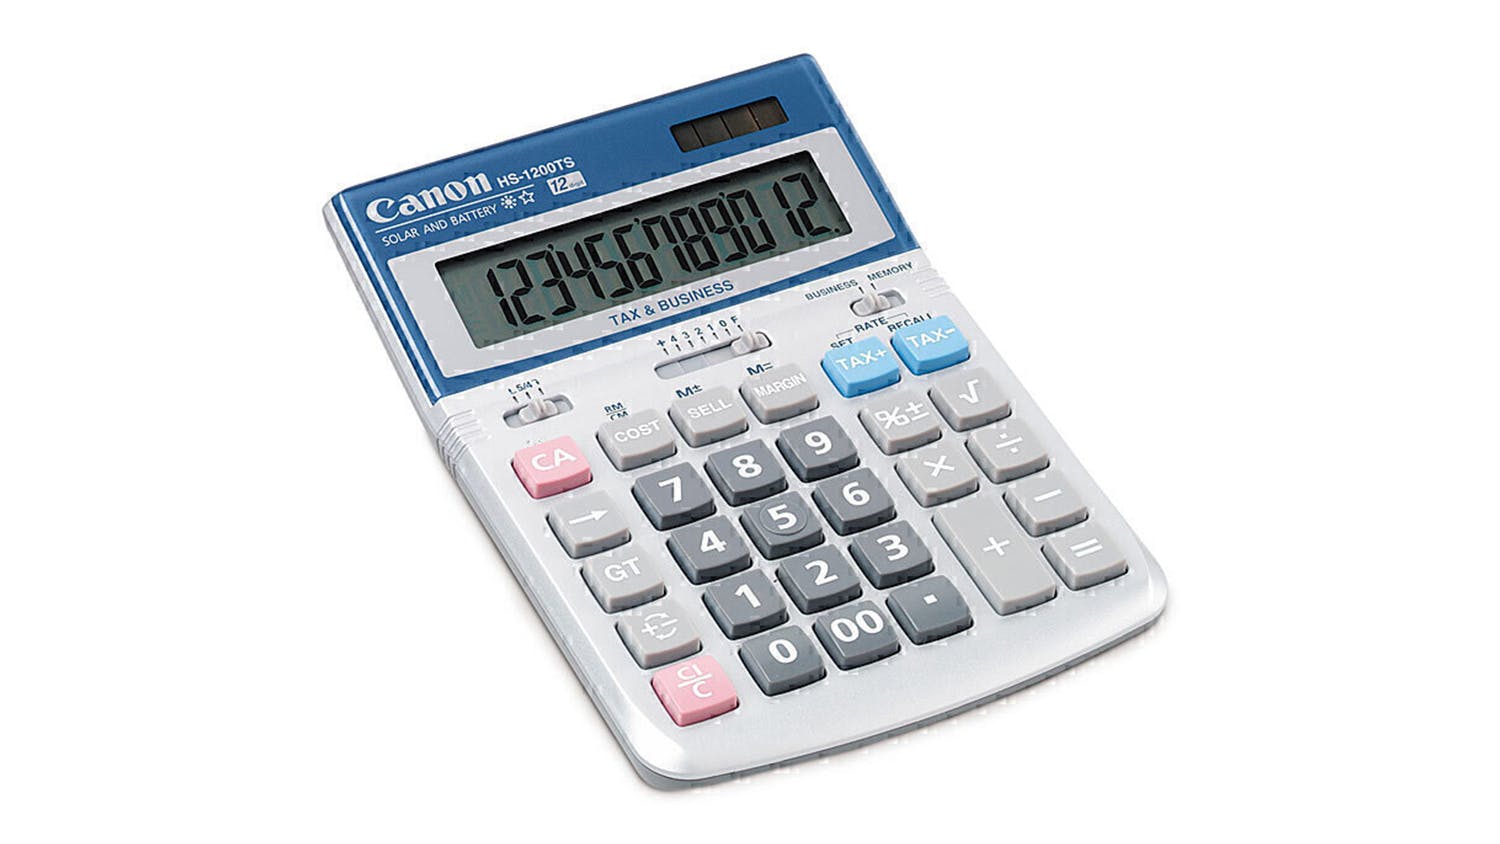 Canon HS-1200TS Calculator